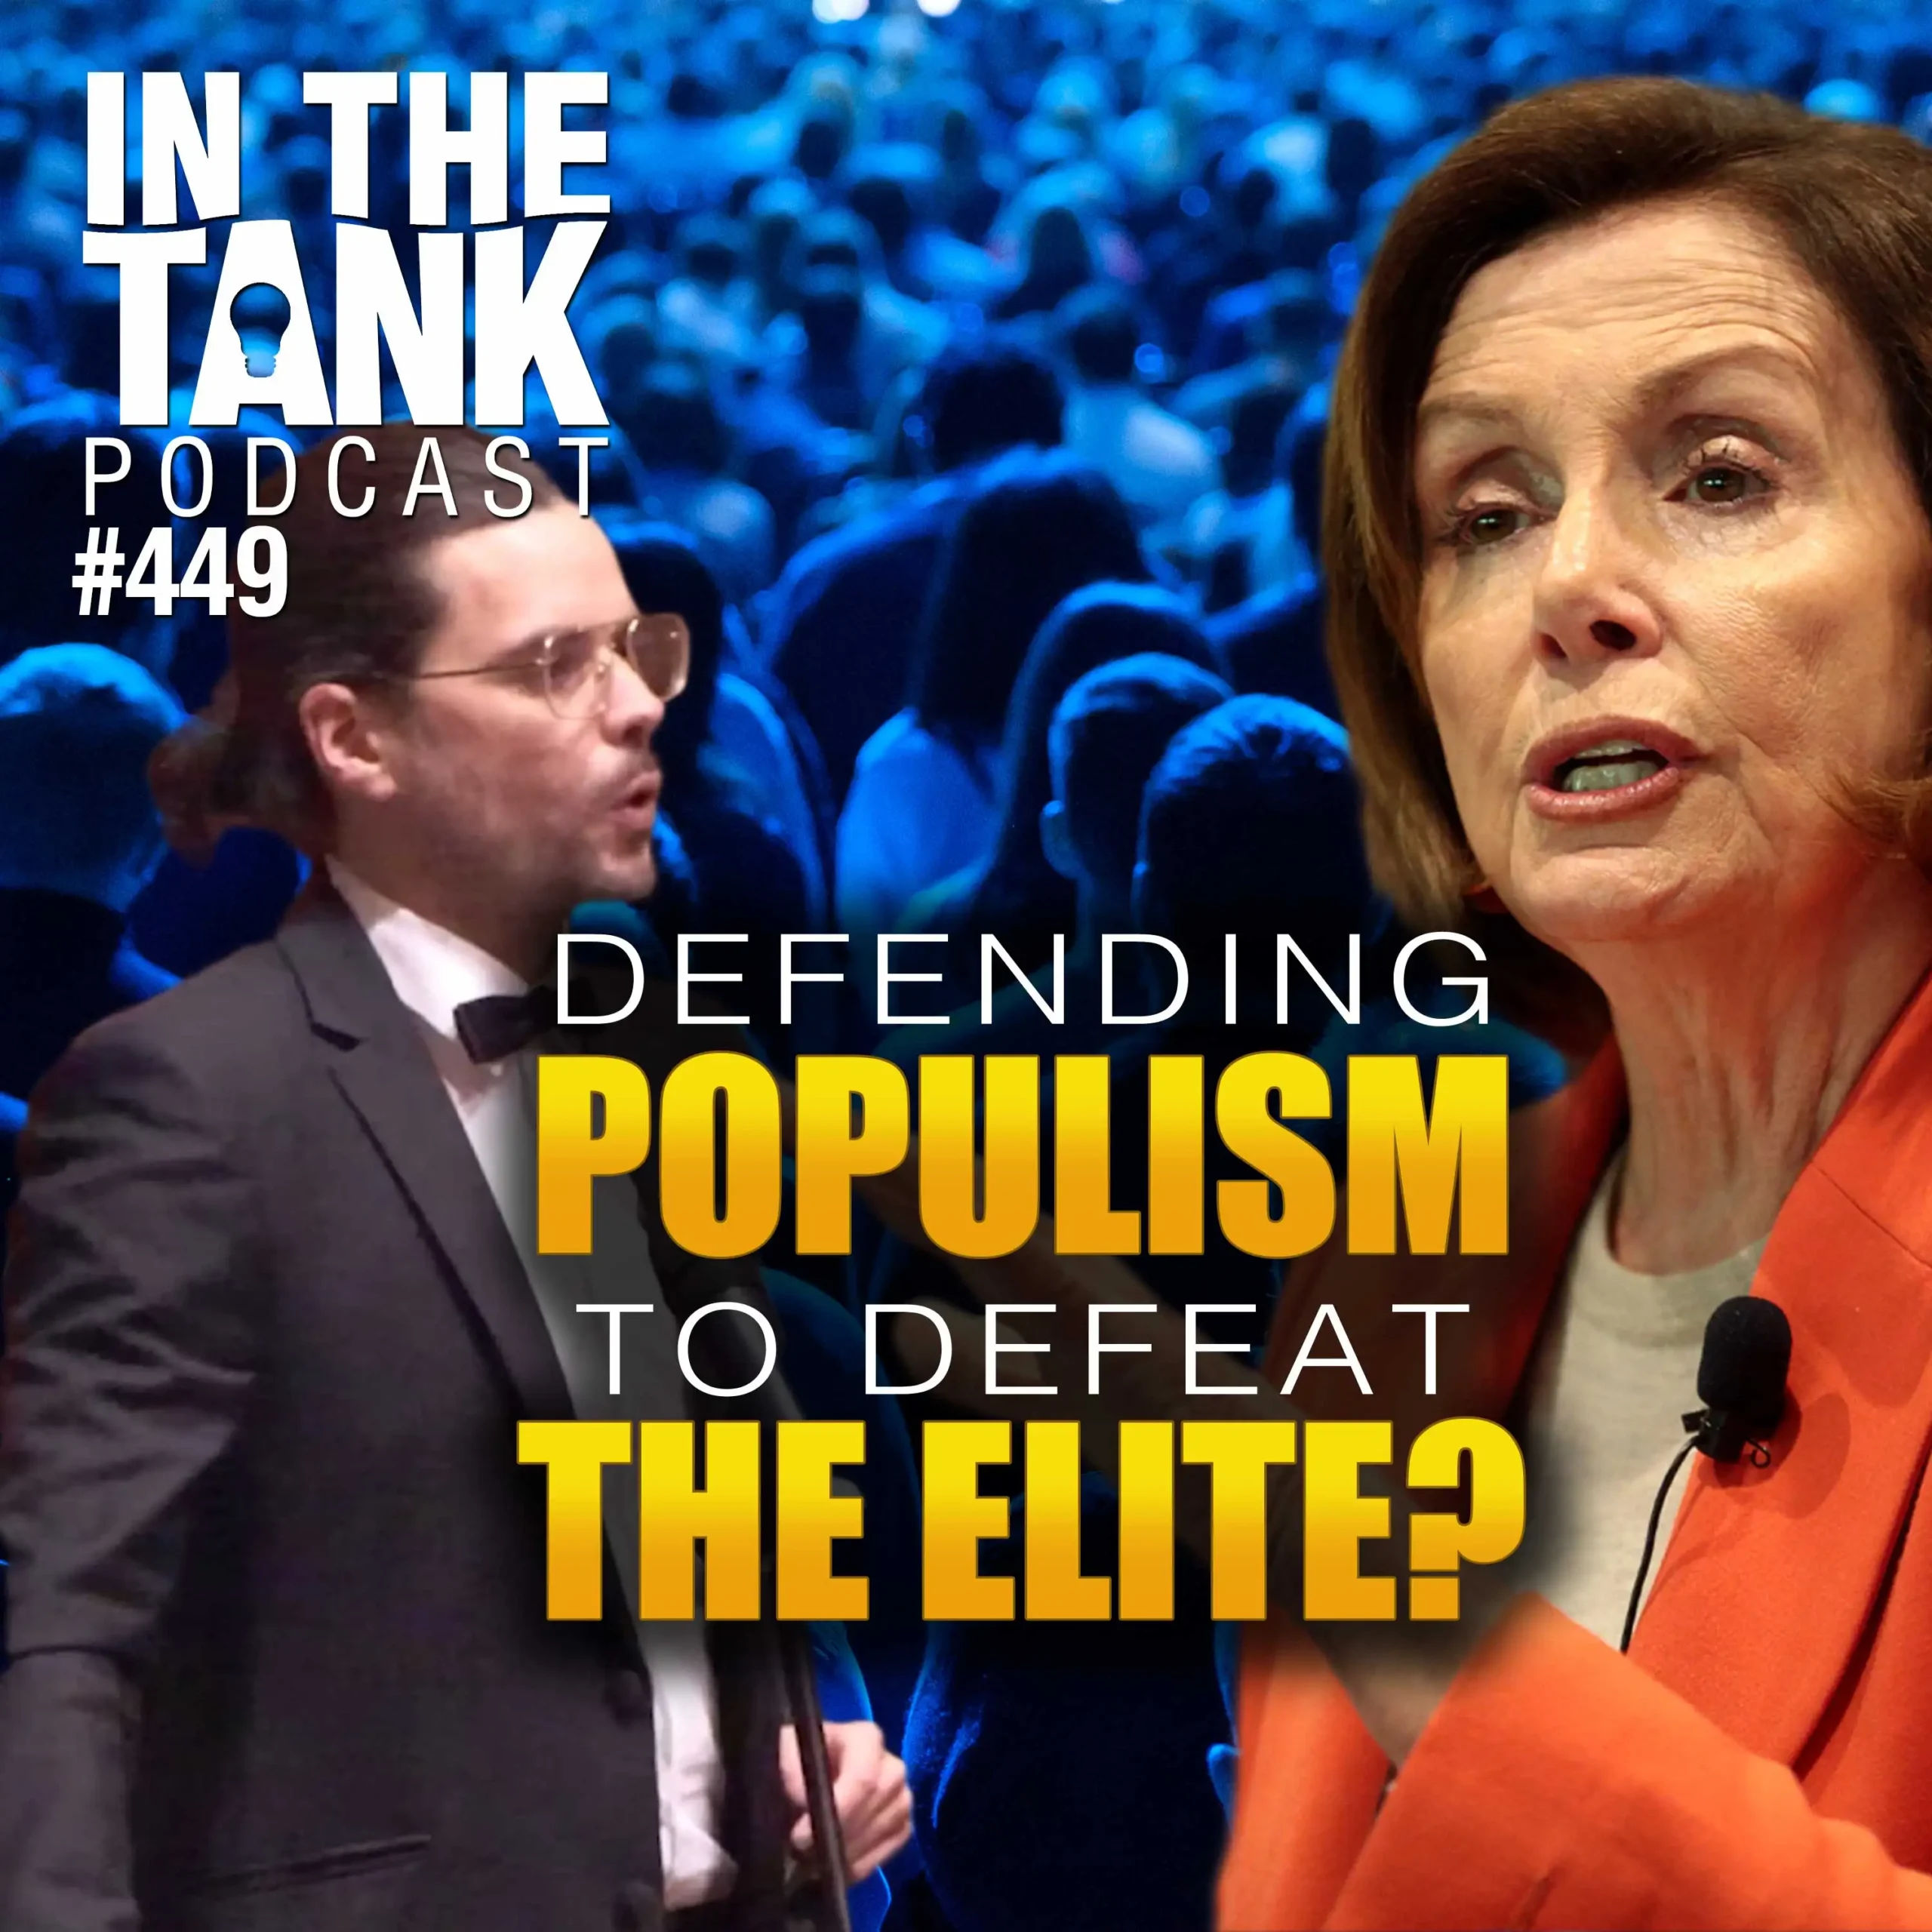 Defending Populism To Defeat The Elite?